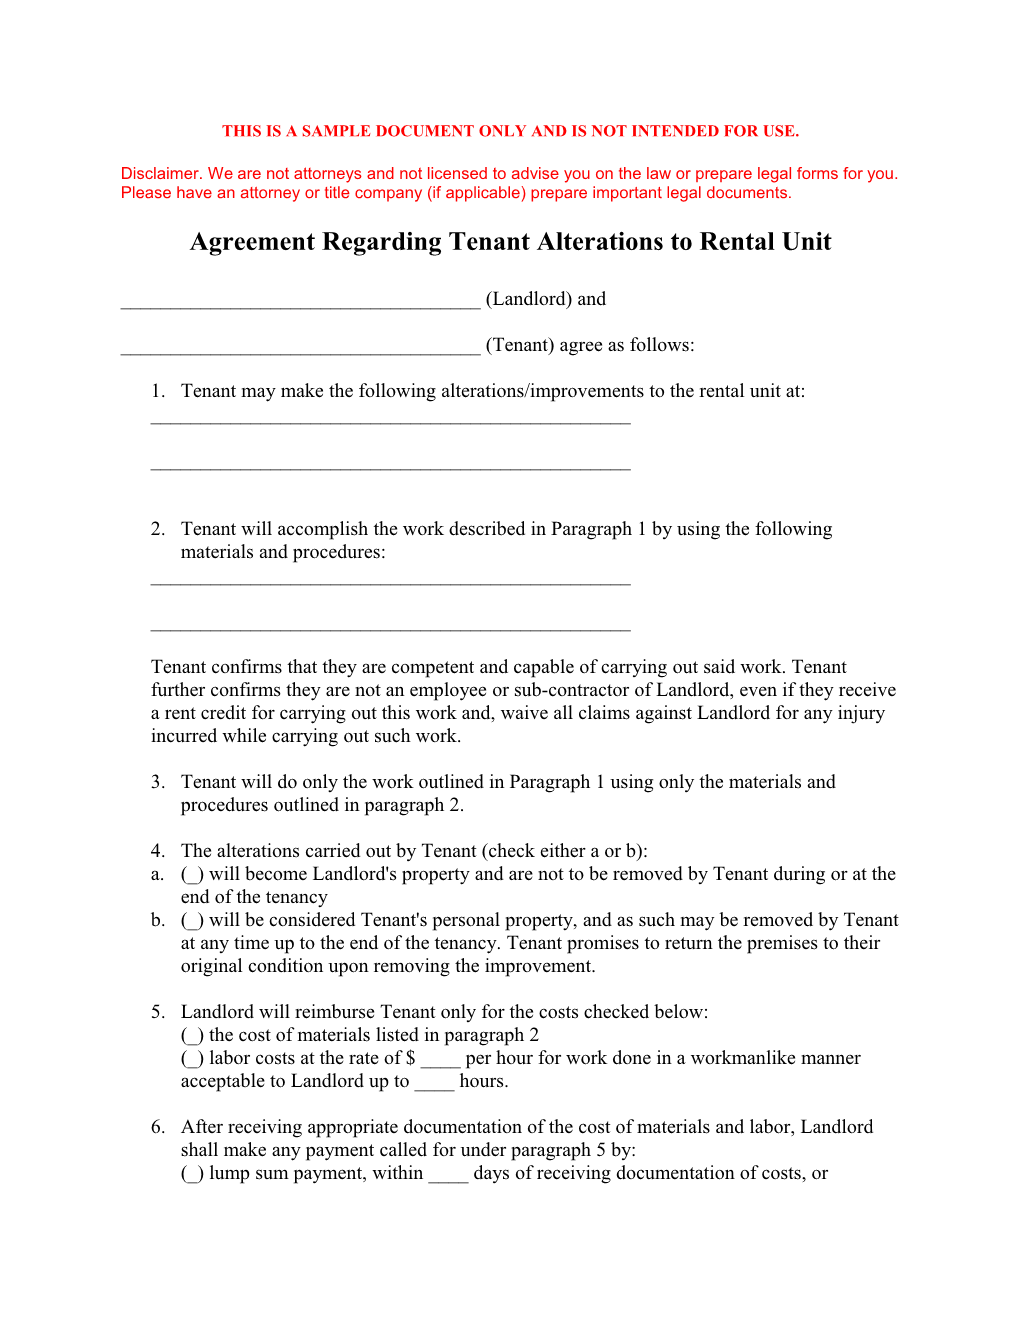 Agreement Regarding Tenant Alterations to Rental Unit